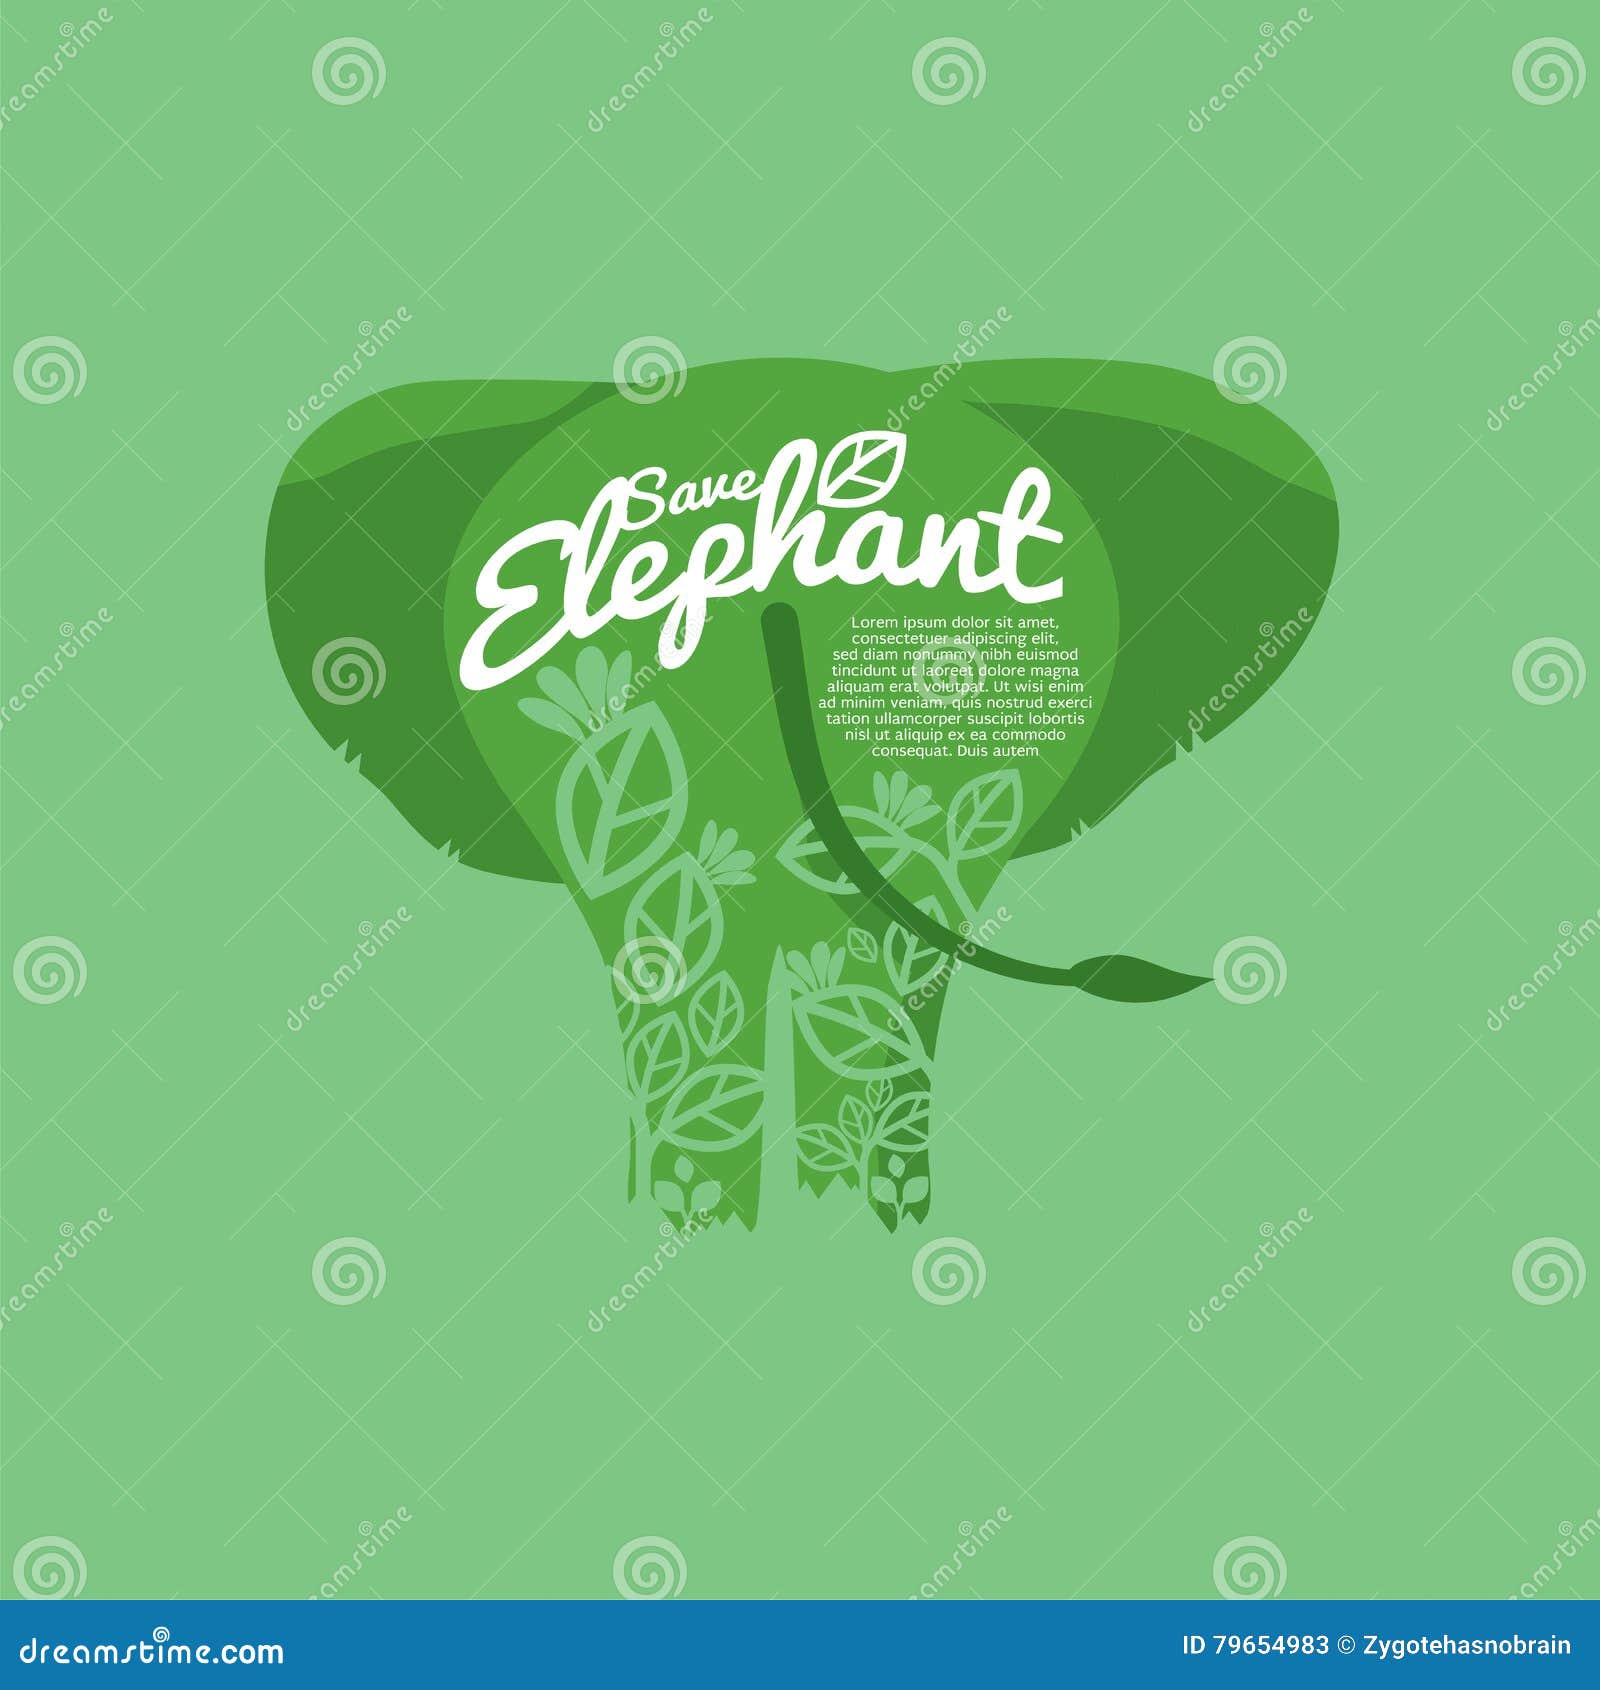 save elephant conservative concept